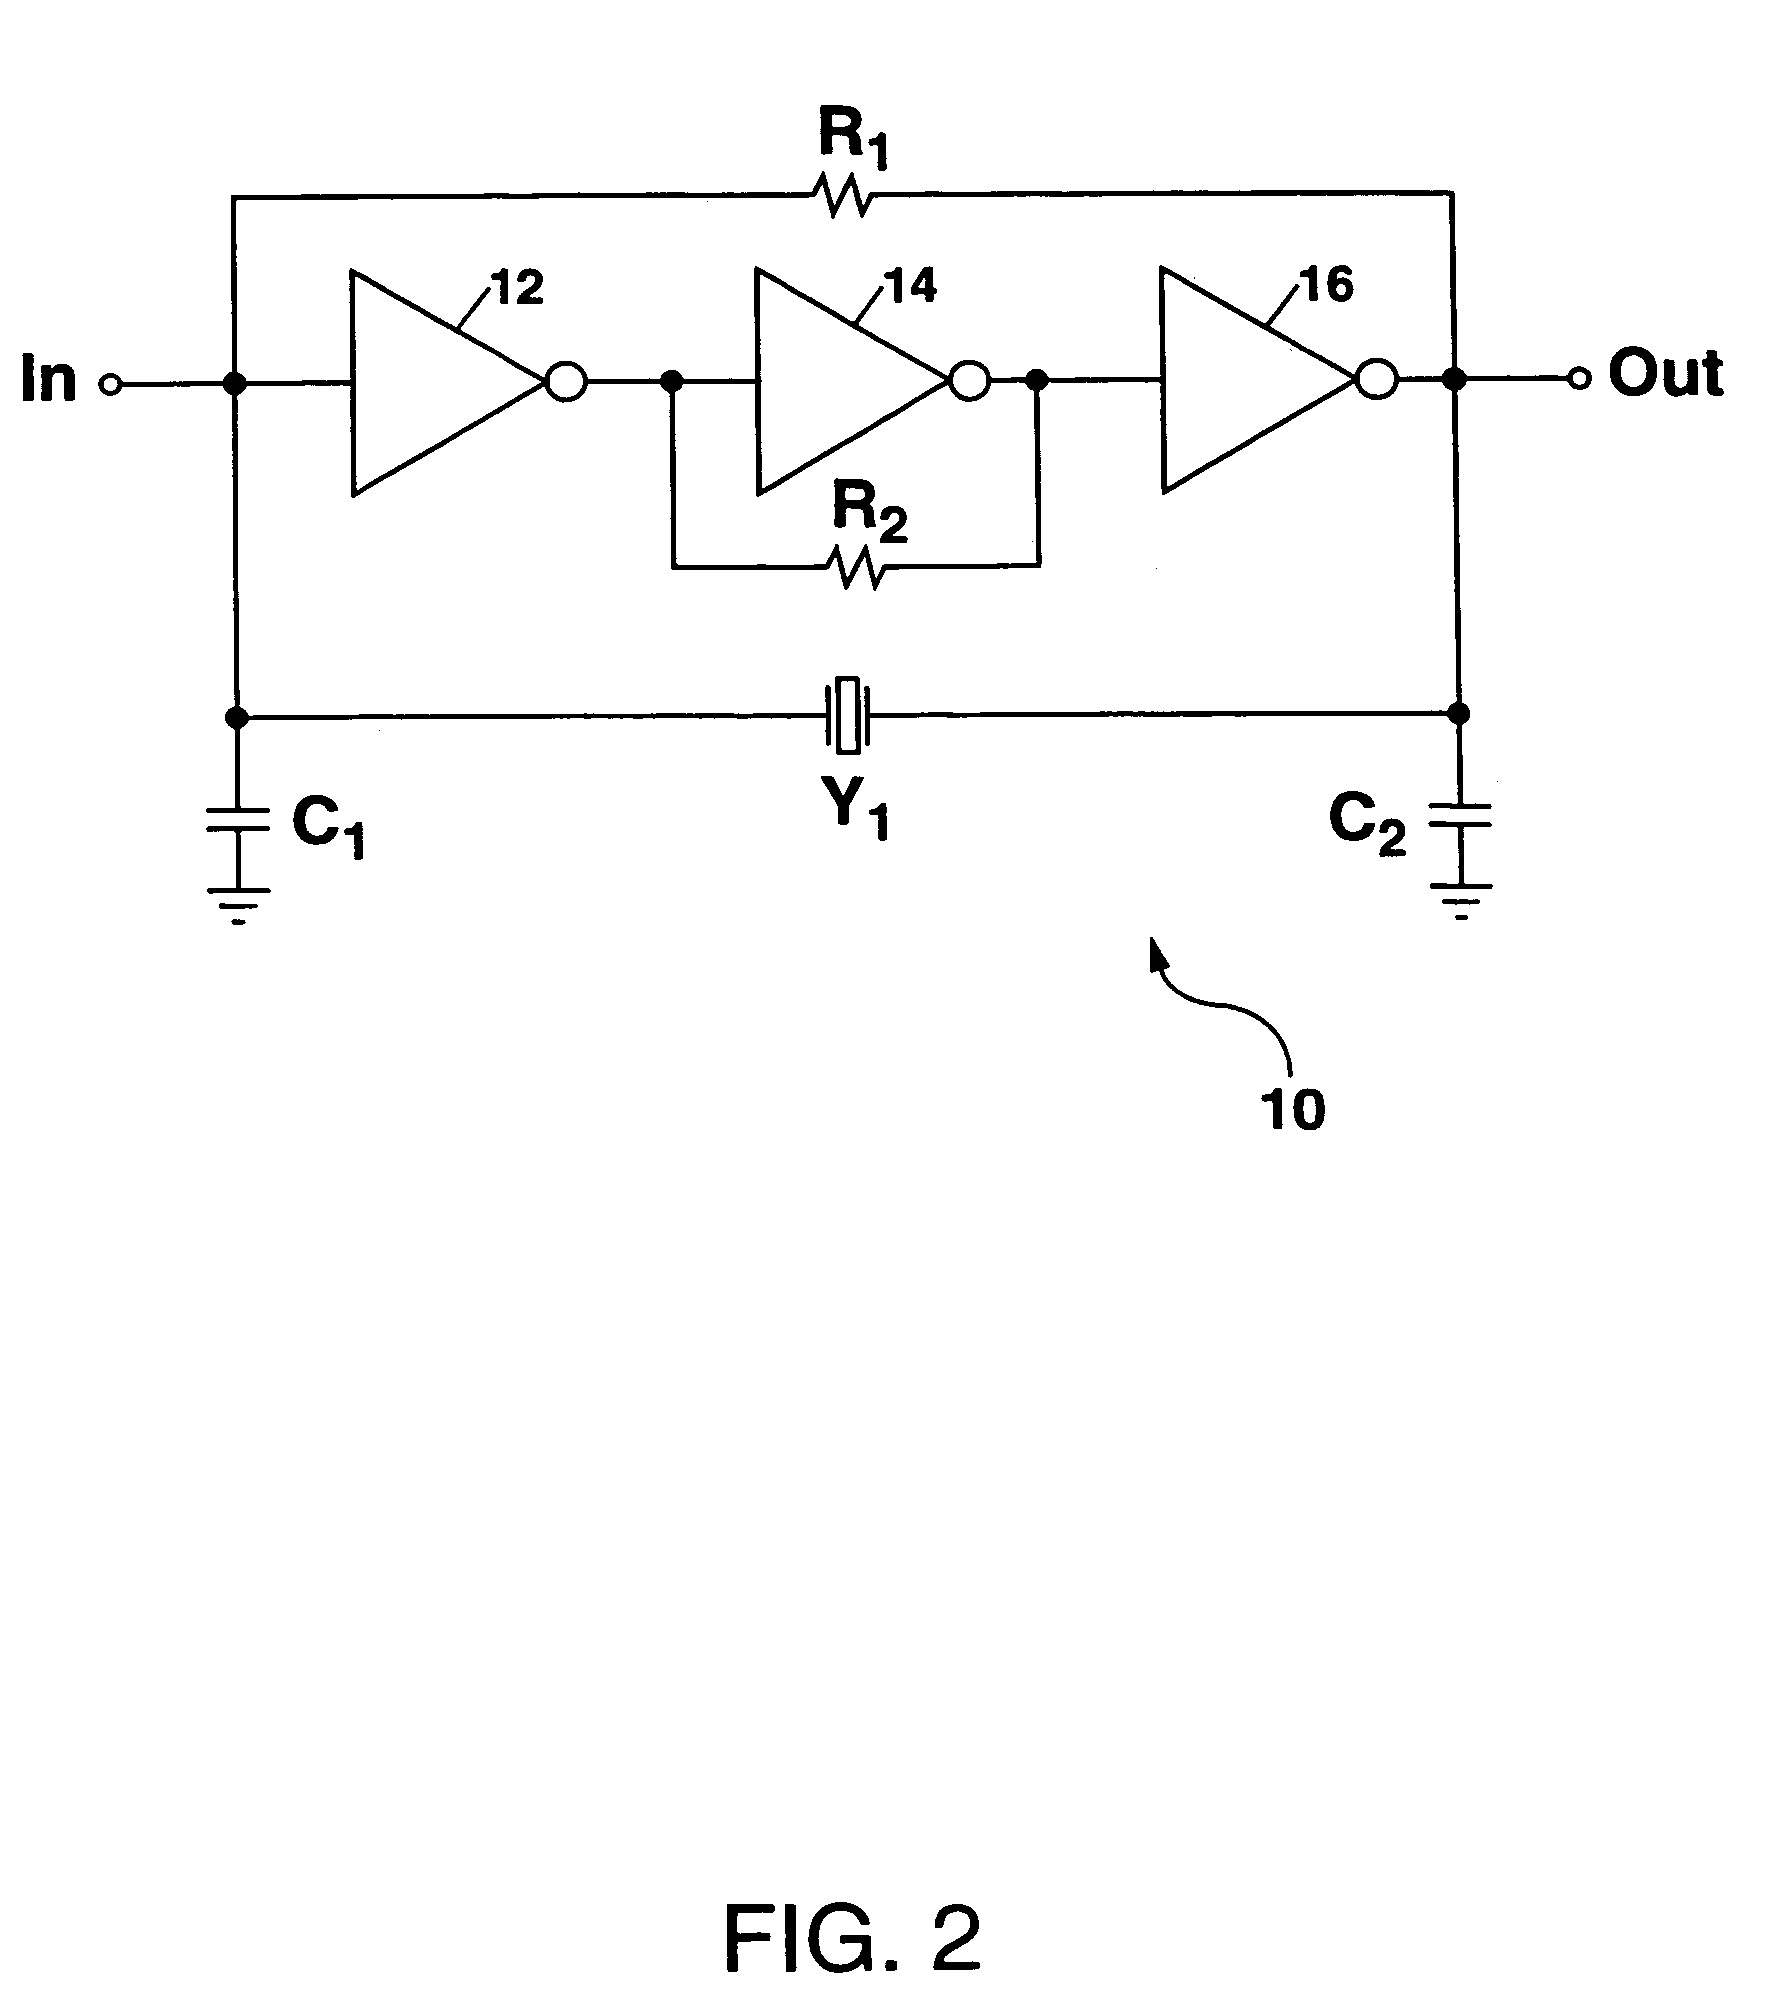 Triple inverter pierce oscillator circuit suitable for CMOS